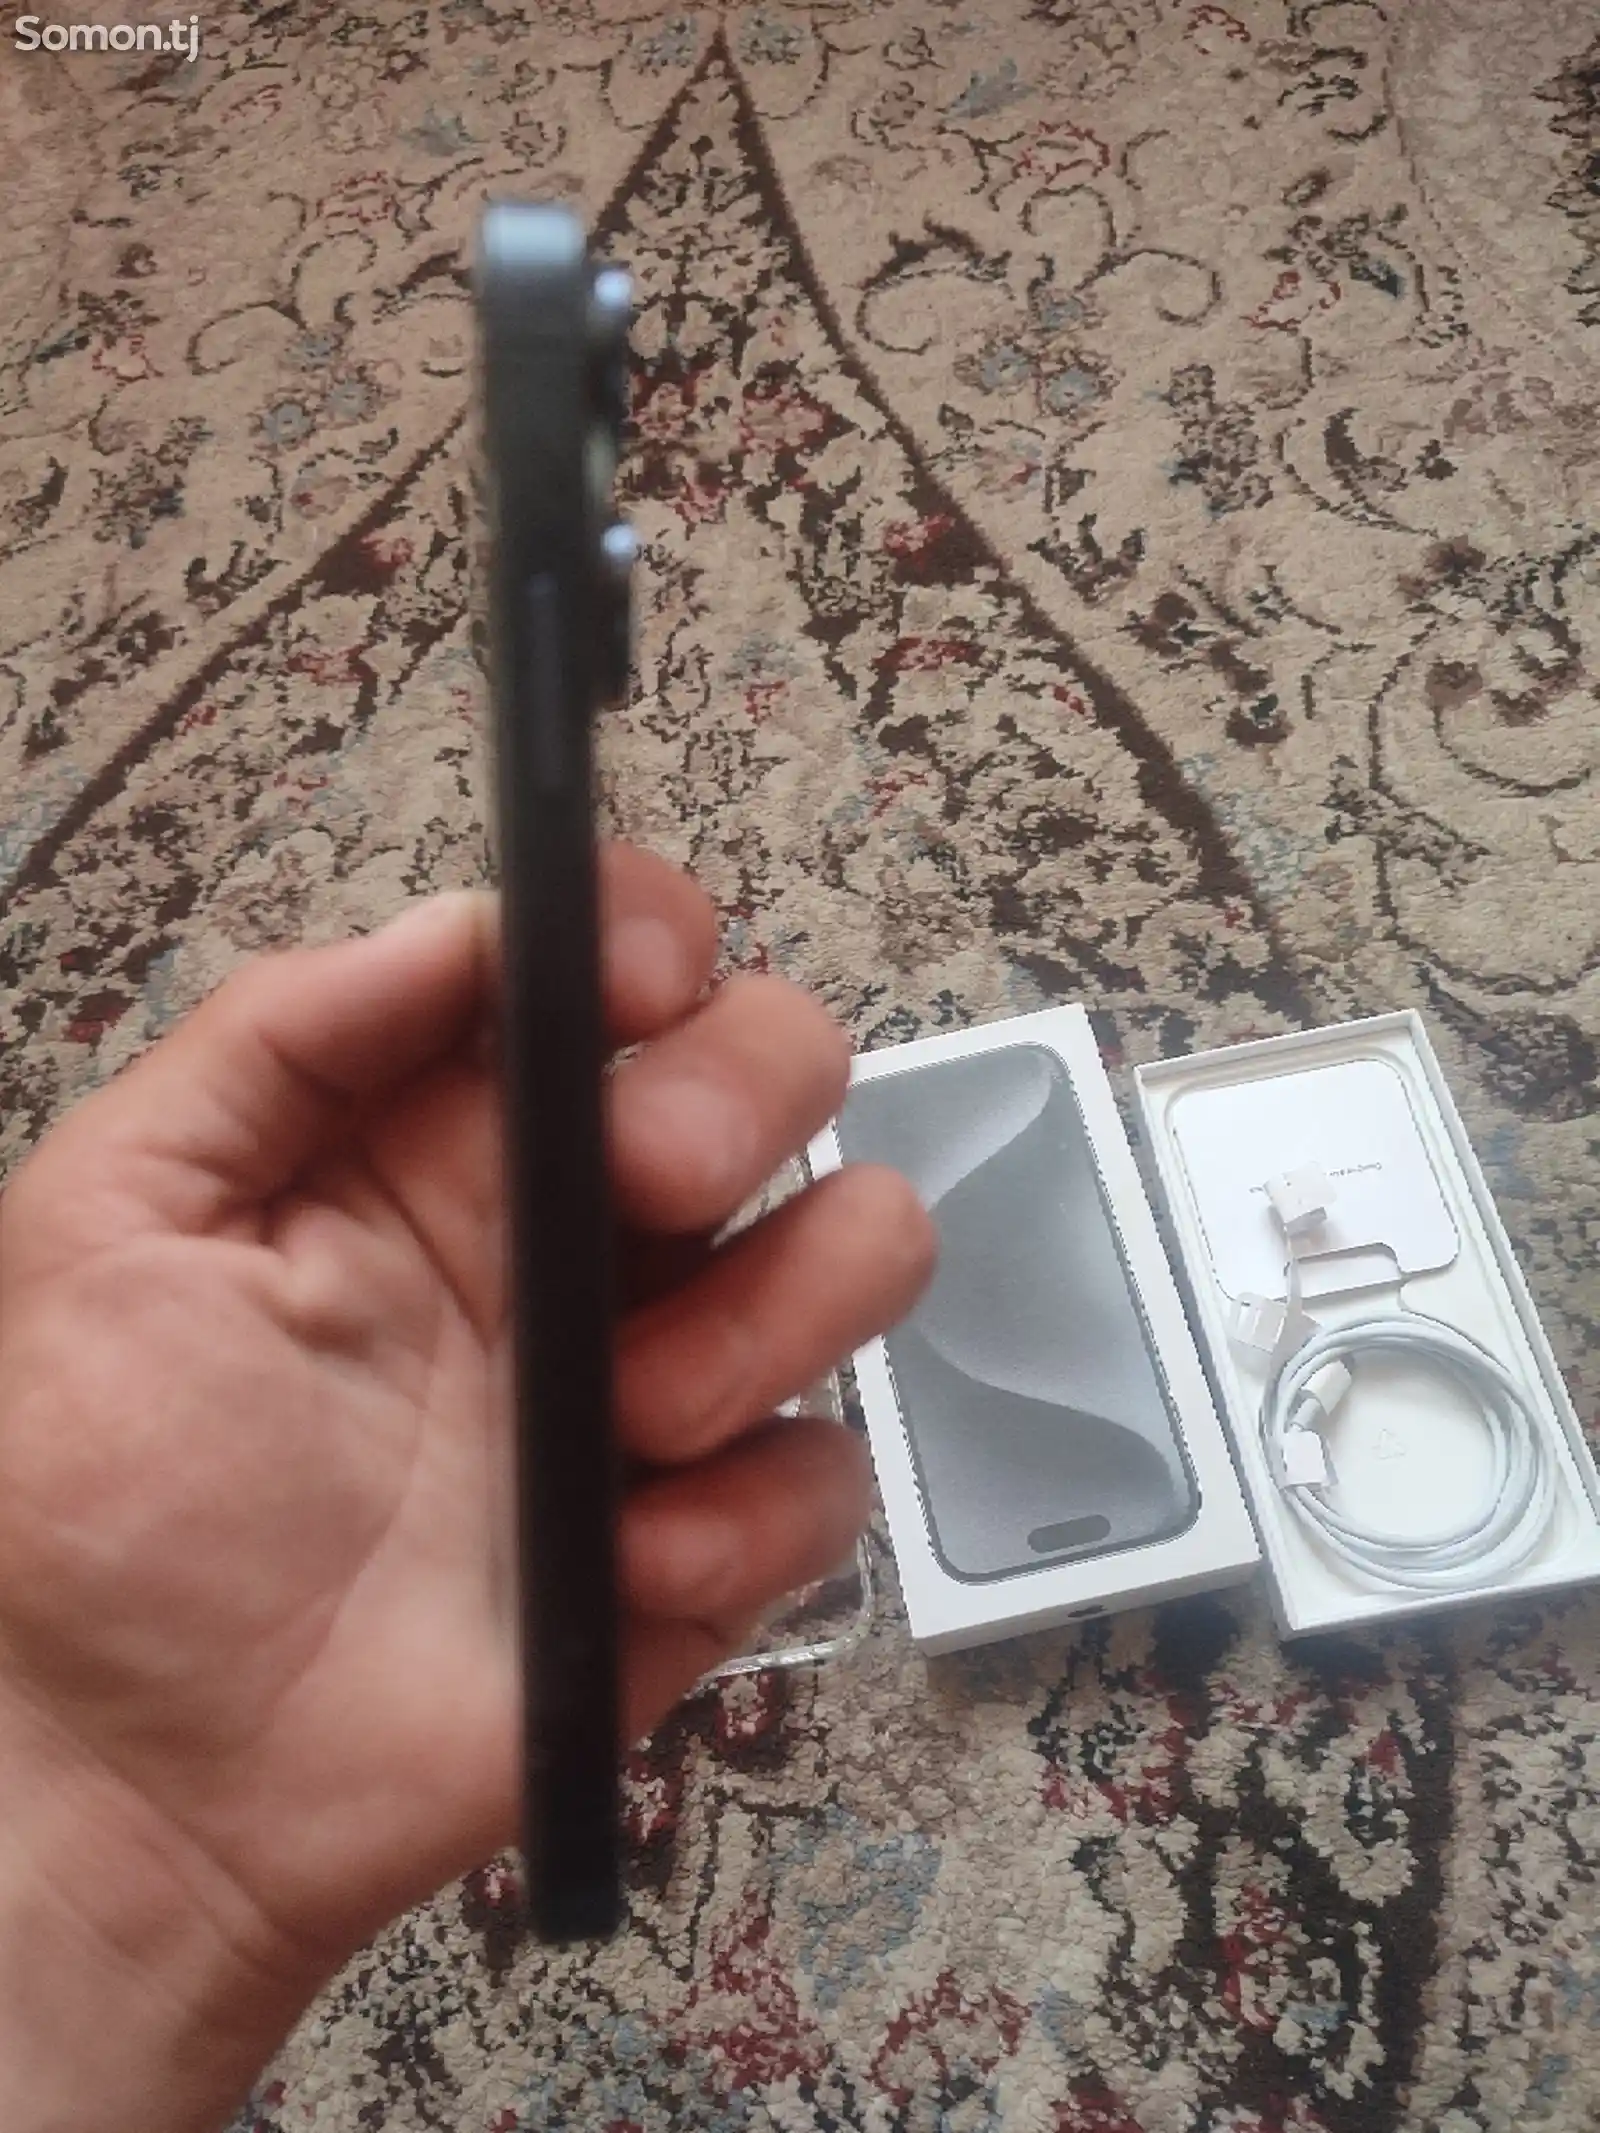 Apple iPhone Xr, 128 gb, Black-4